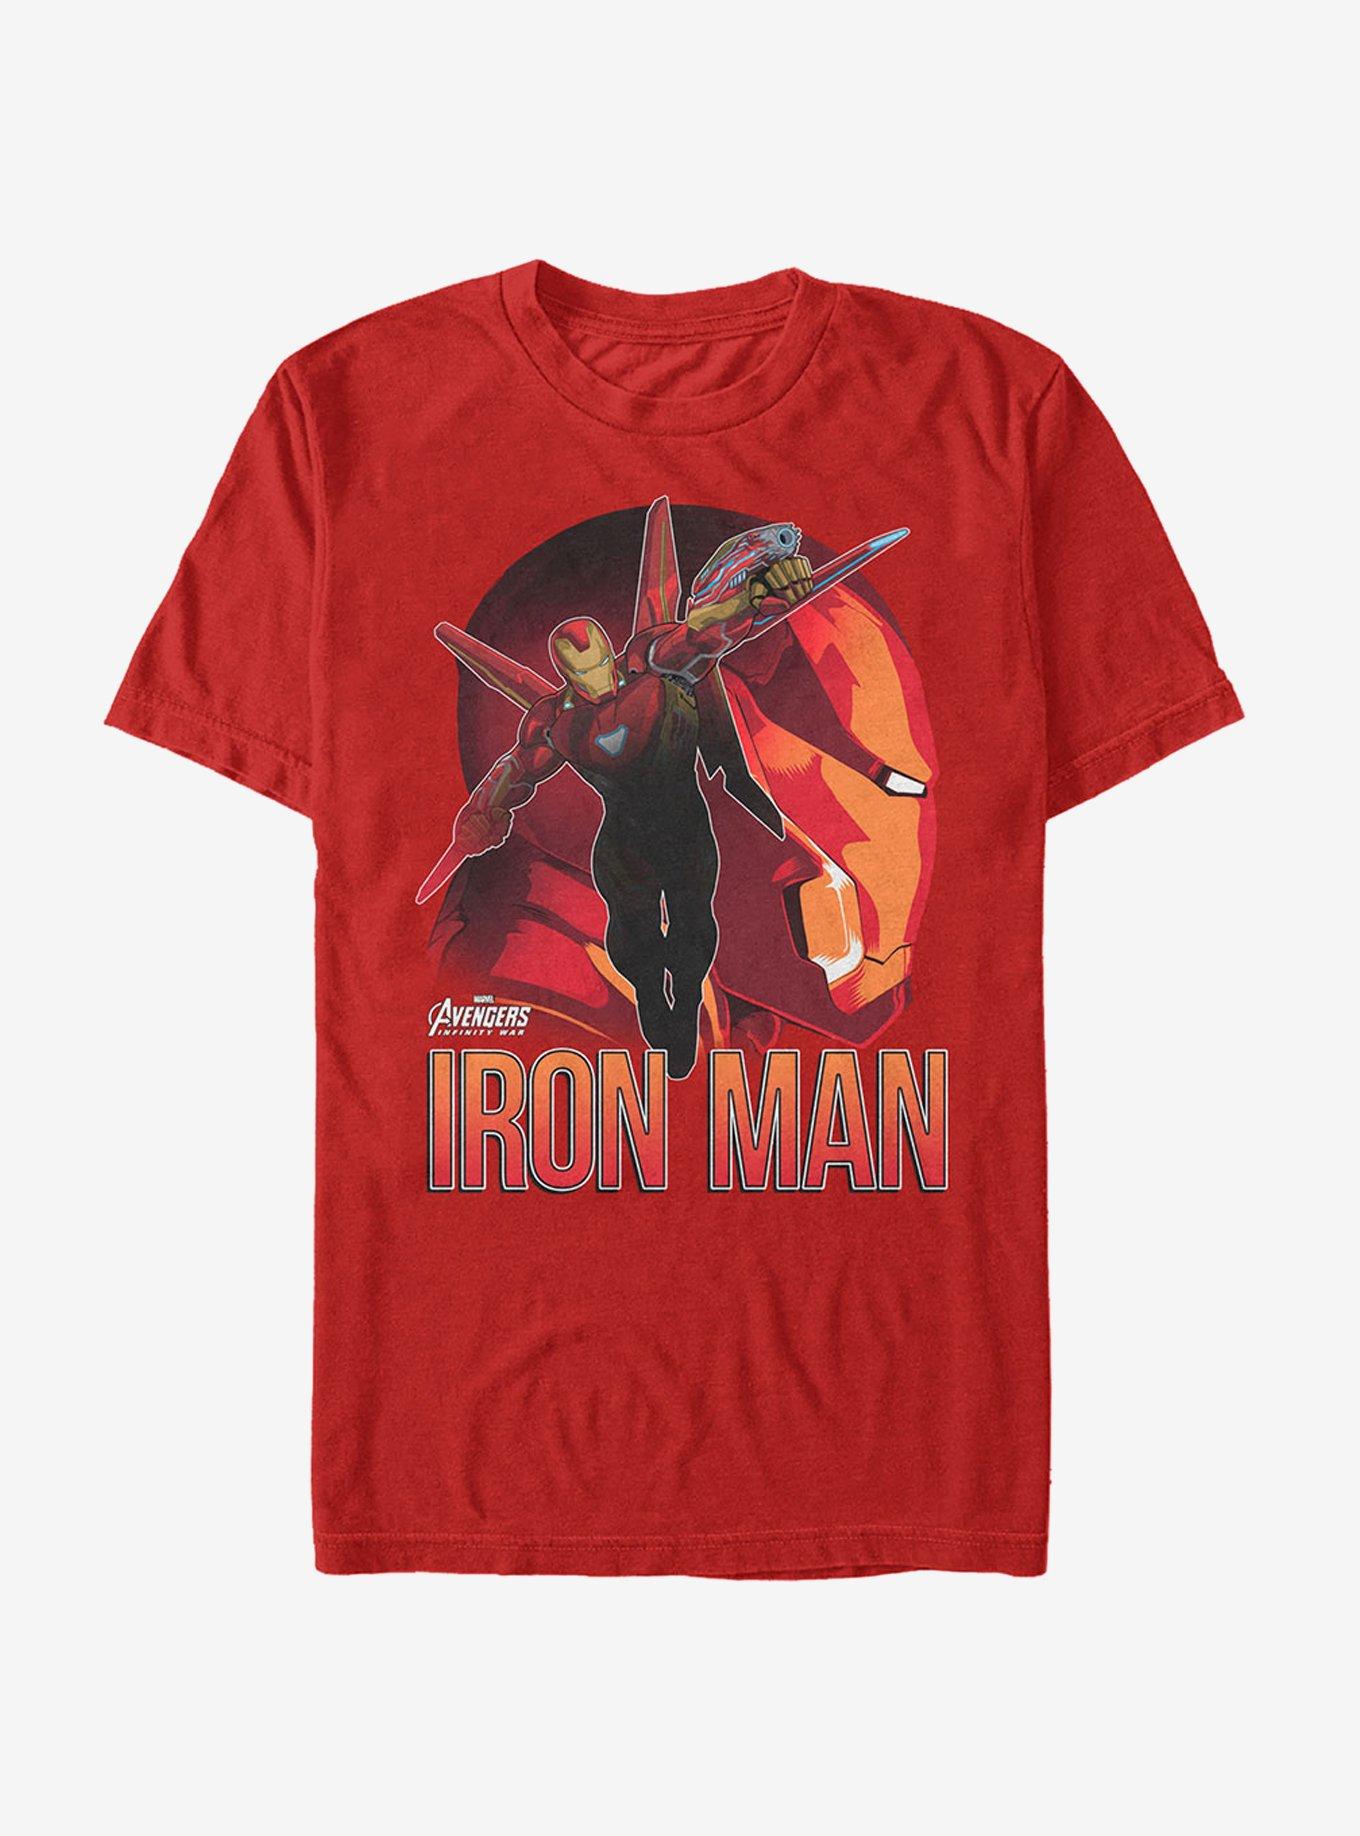 Marvel Avengers: Infinity War Iron Man View T-Shirt - RED | Hot Topic